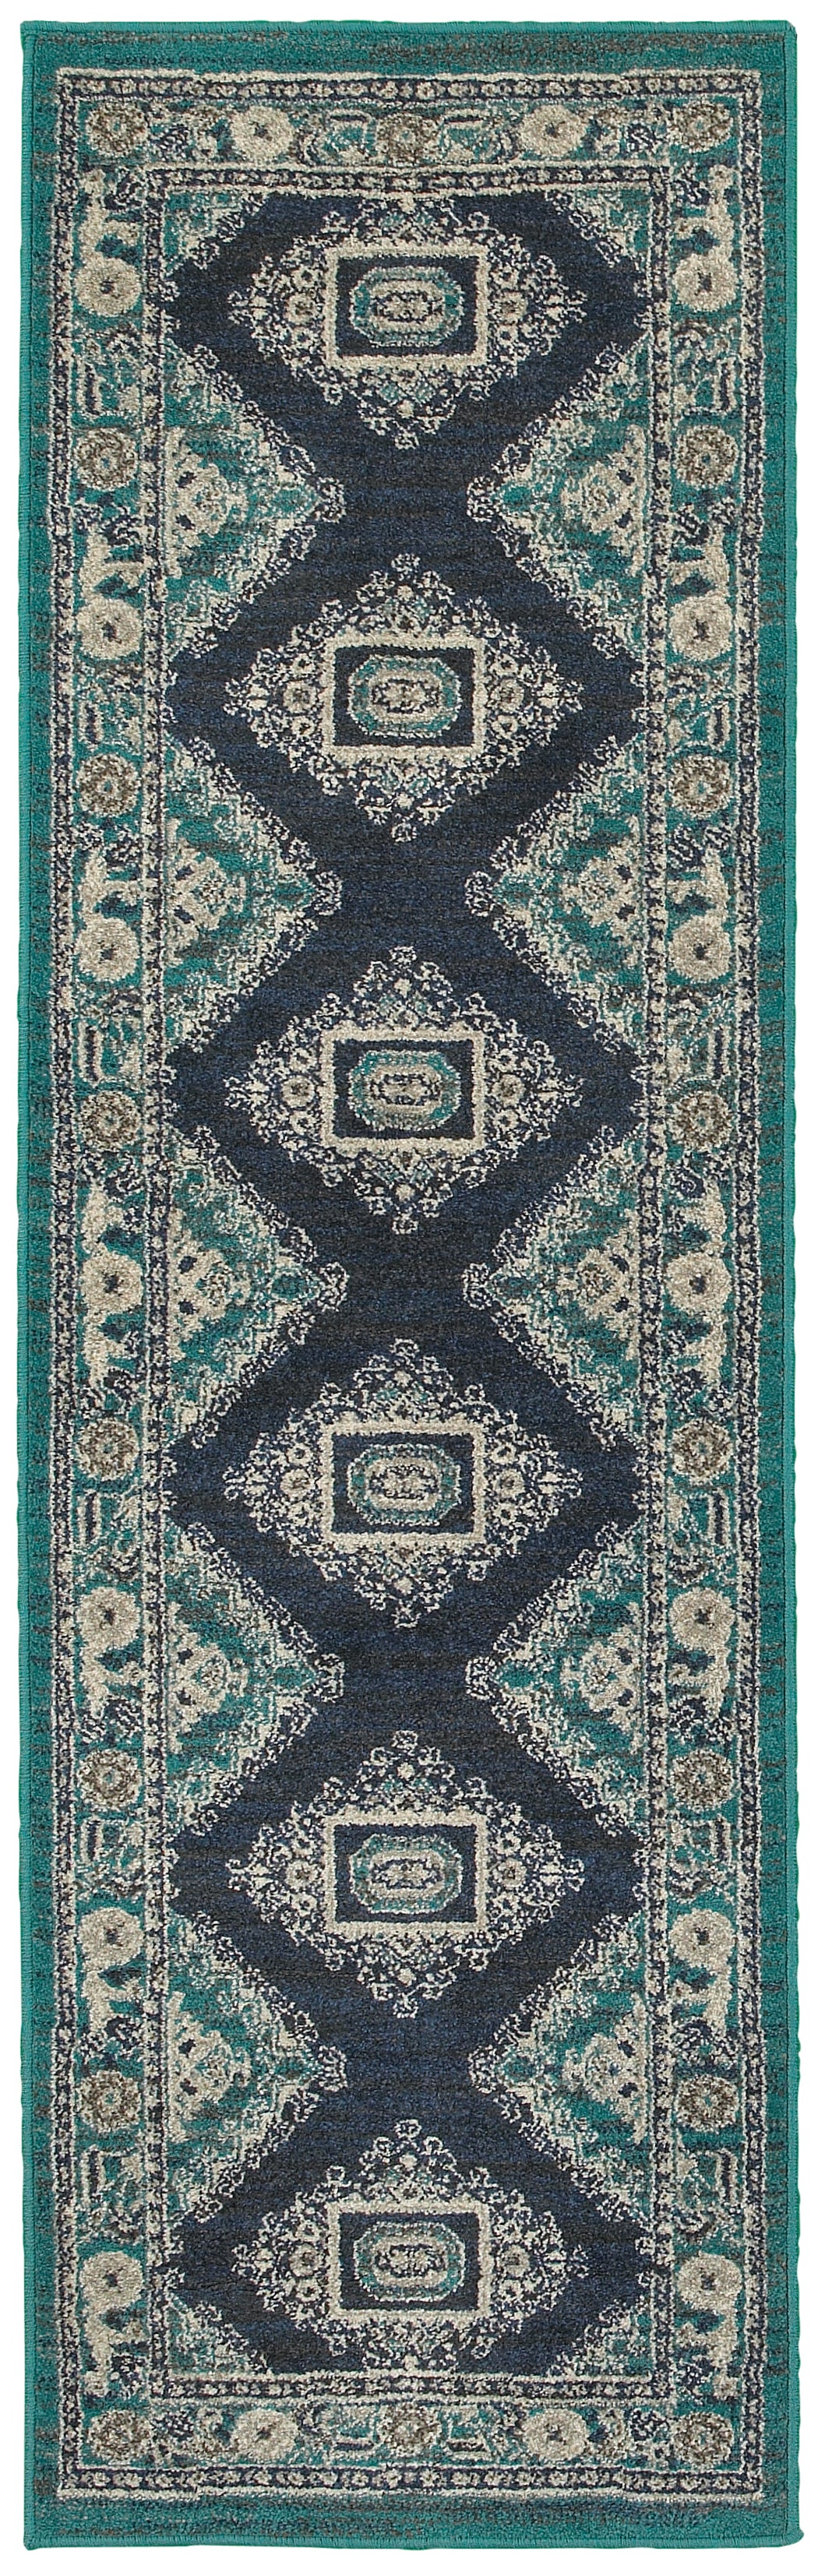 Oriental Weavers Highlands Blue/Ivory Medallion 6658A Area Rug